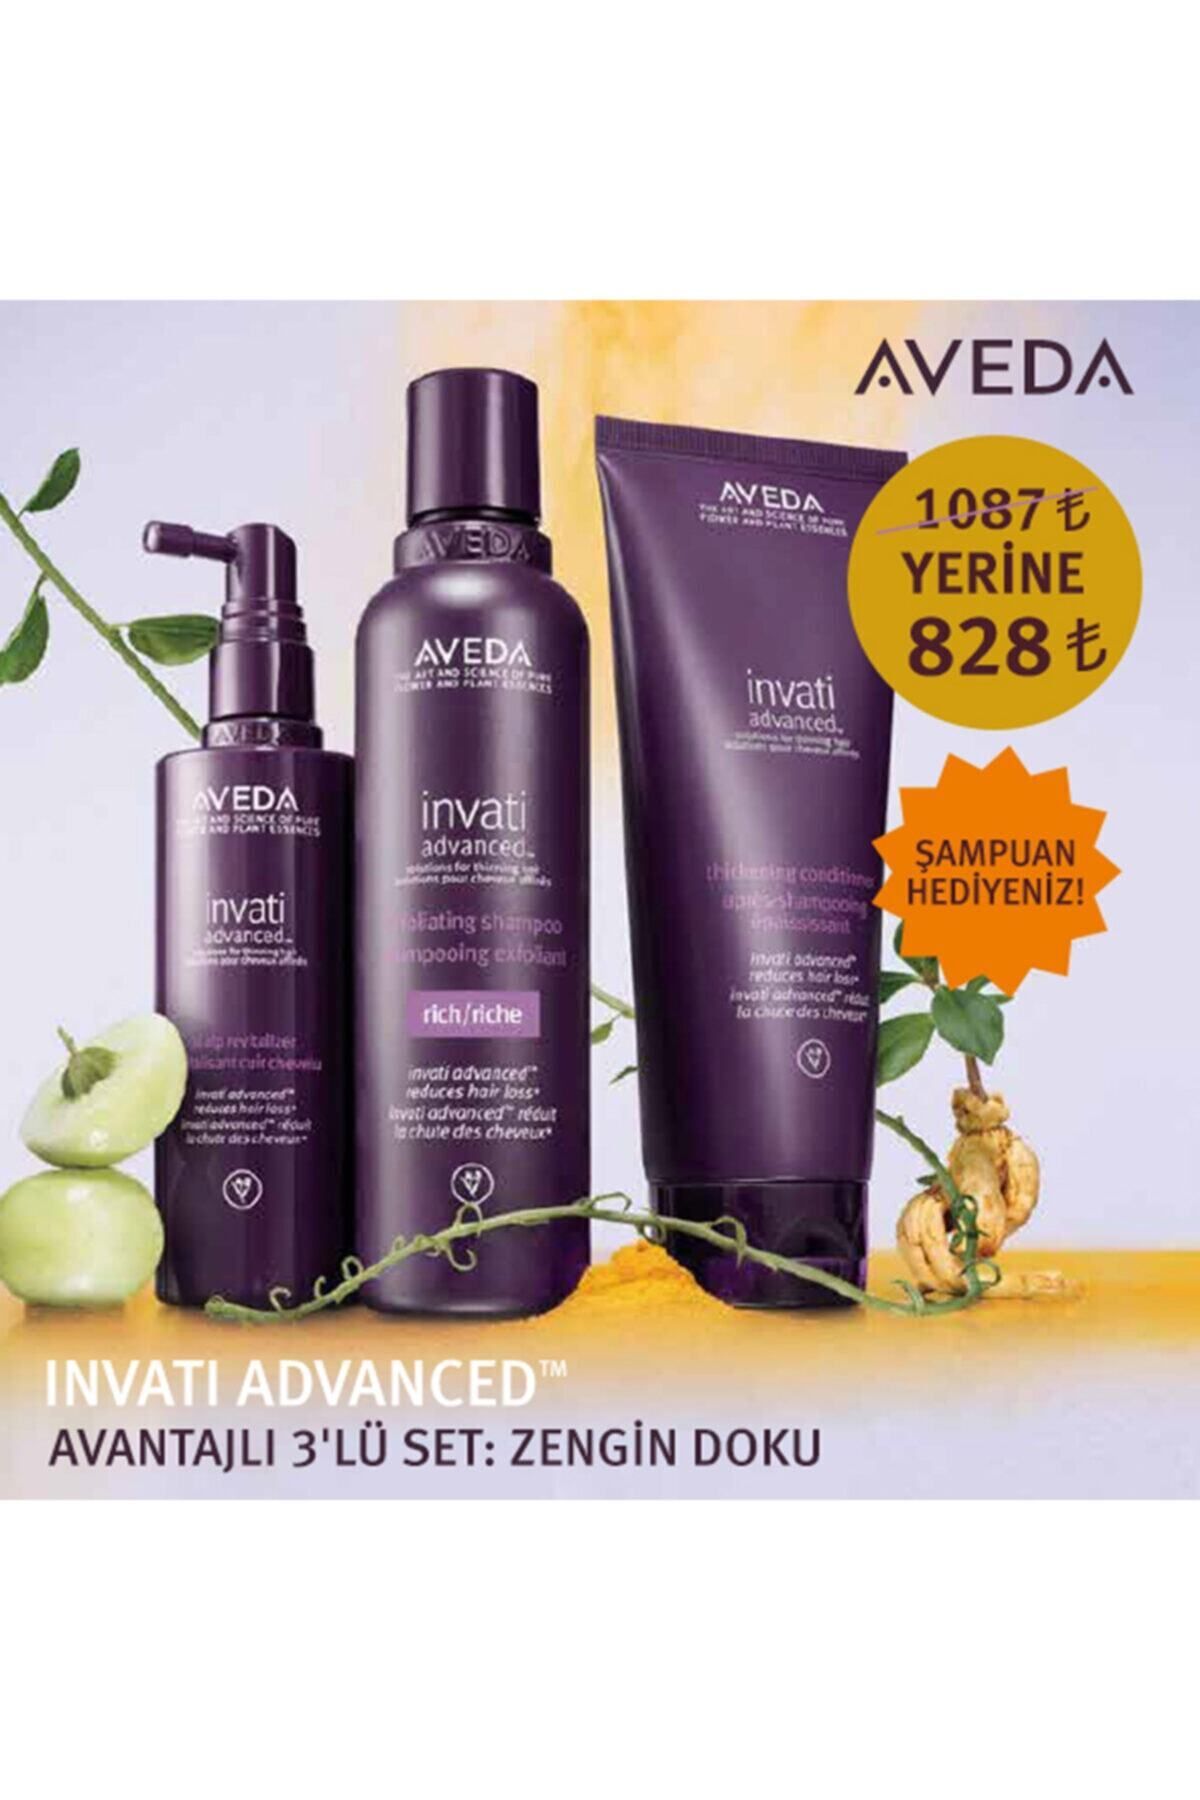 Aveda Invati Advanced Avantajlı 3'lü Set : Zengin Doku saç dökülmesine özel formül